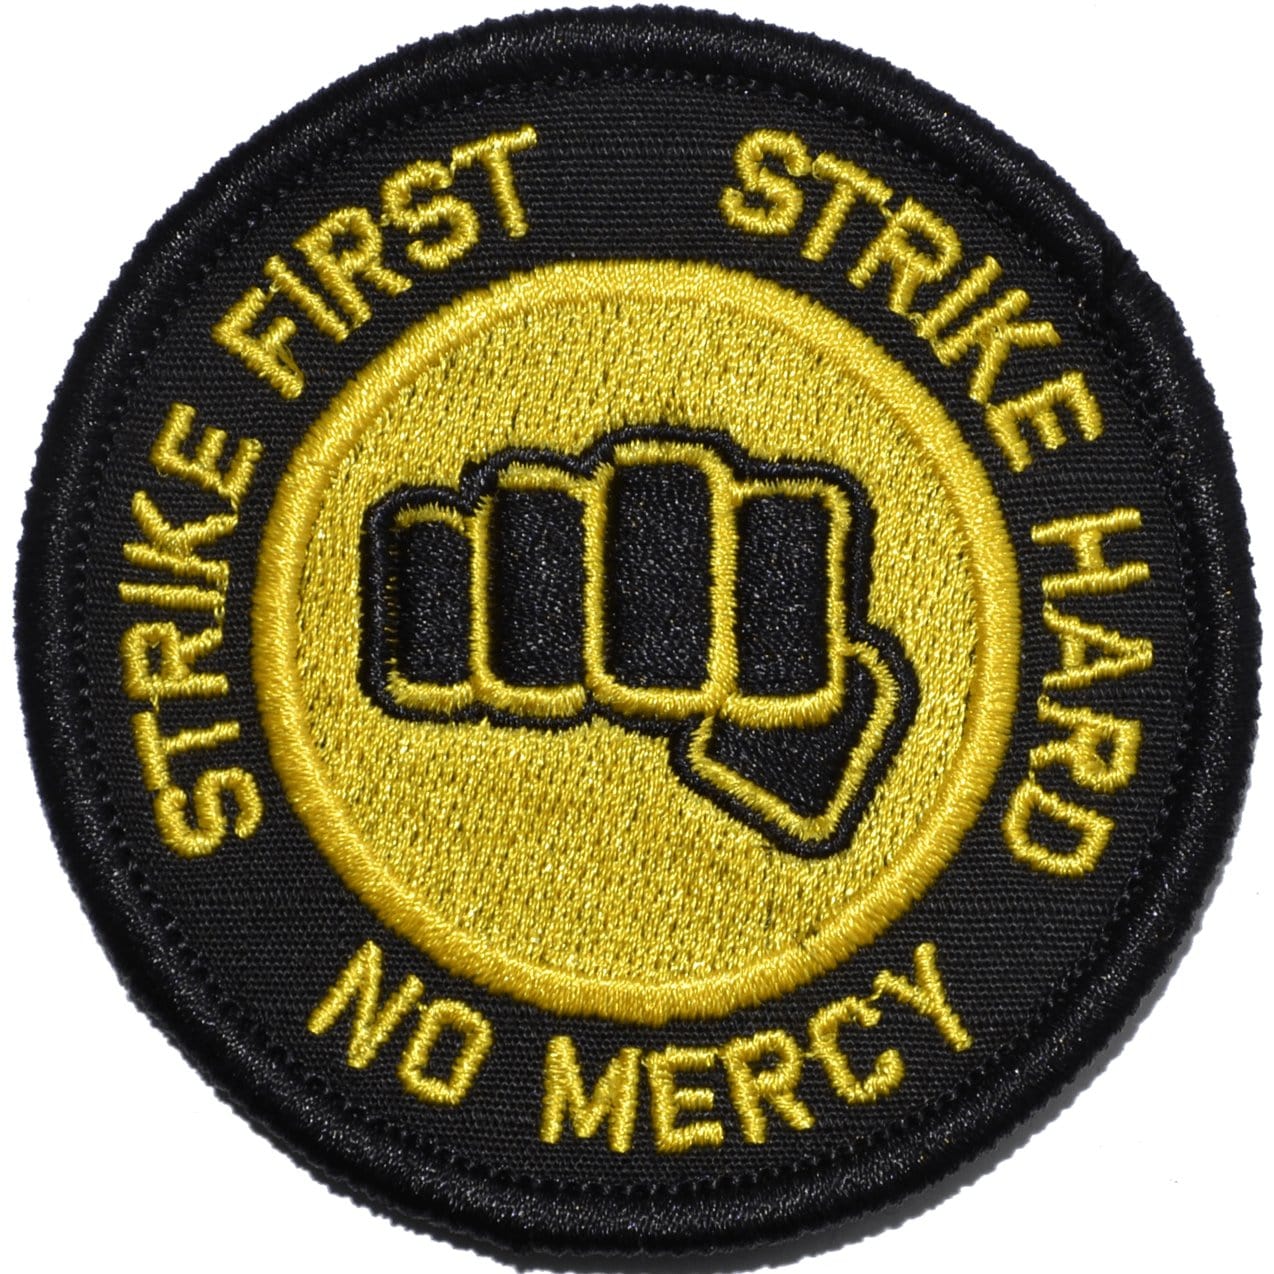 Tactical Gear Junkie Patches Black w/ Yellow Strike First Strike Hard No Mercy - Cobra Kai Motto- 3 inch Round Patch